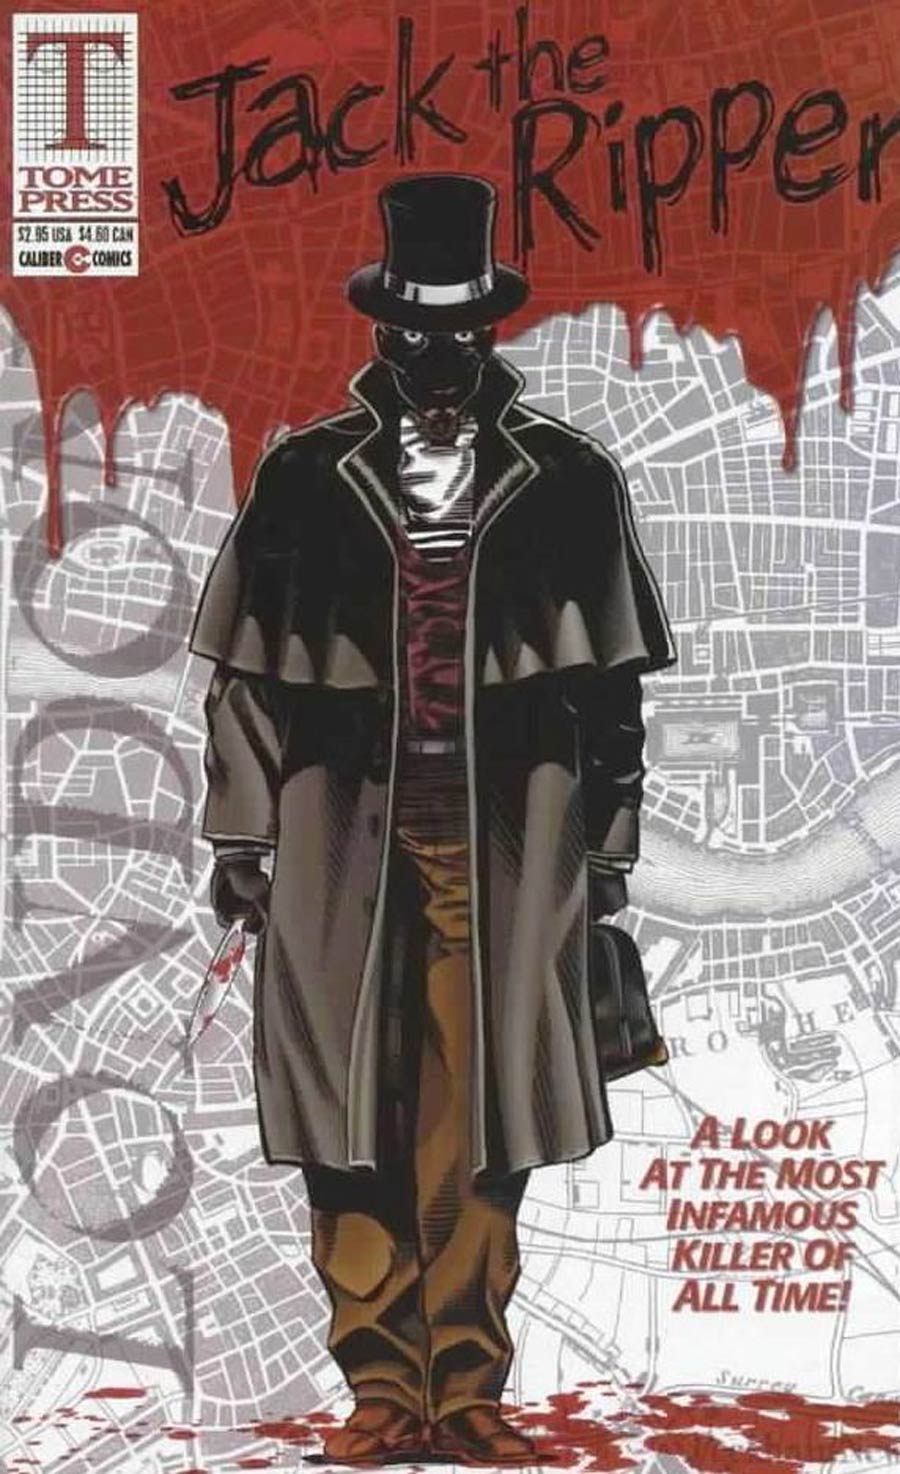 Jack The Ripper (Tome Press) #1